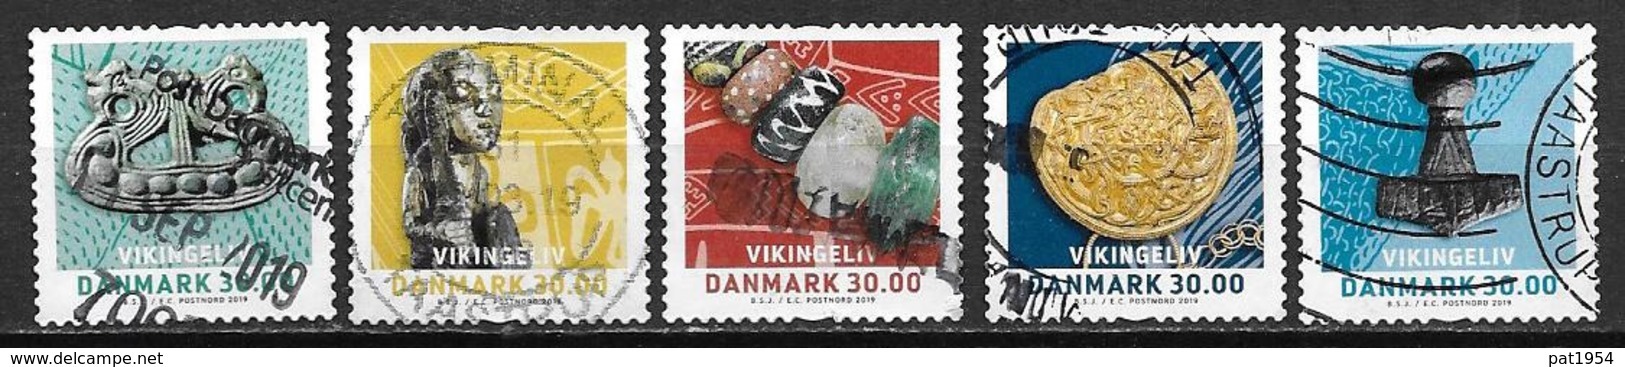 Danemark 2019 Série Oblitérée Vikings - Usati